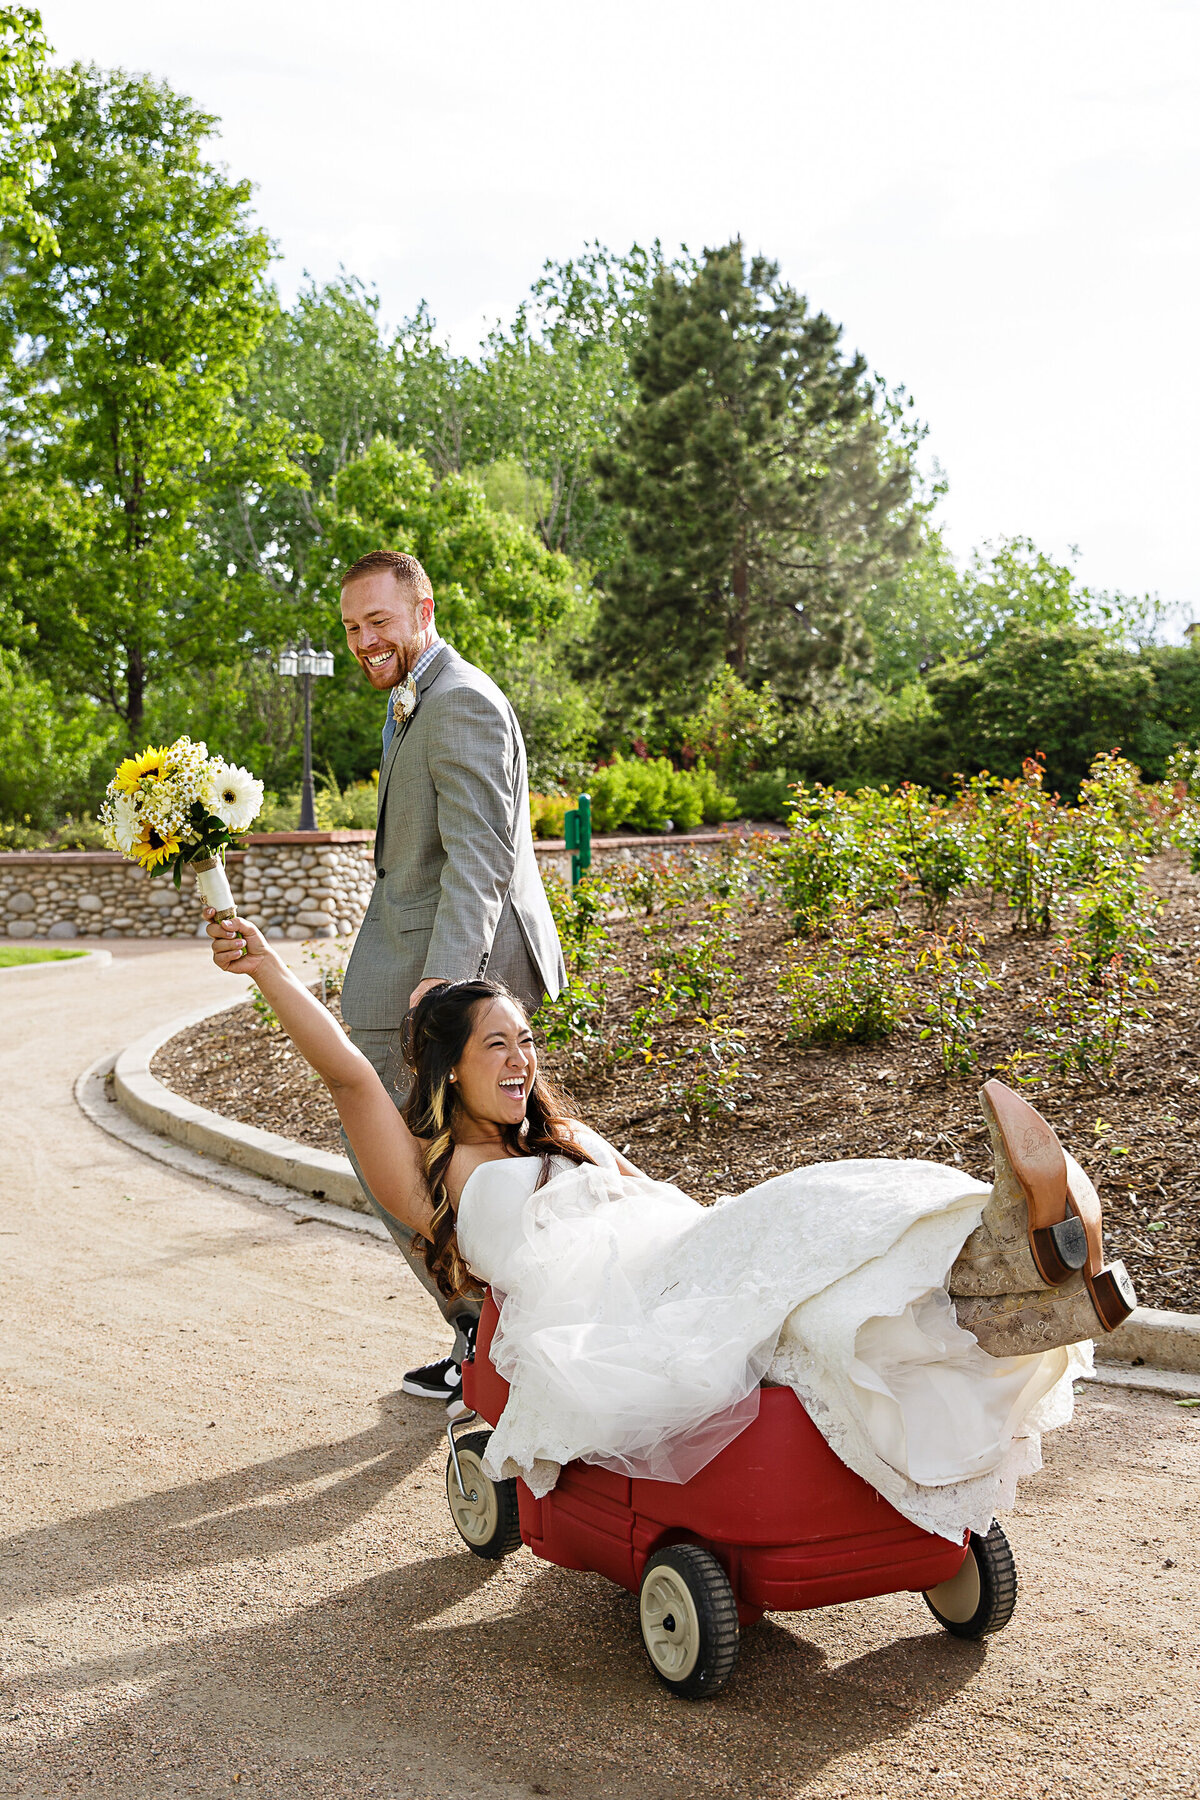 bride-pulled-in-wagon-by-groom-fun-wedding-photography-hudson-gardens-colorado